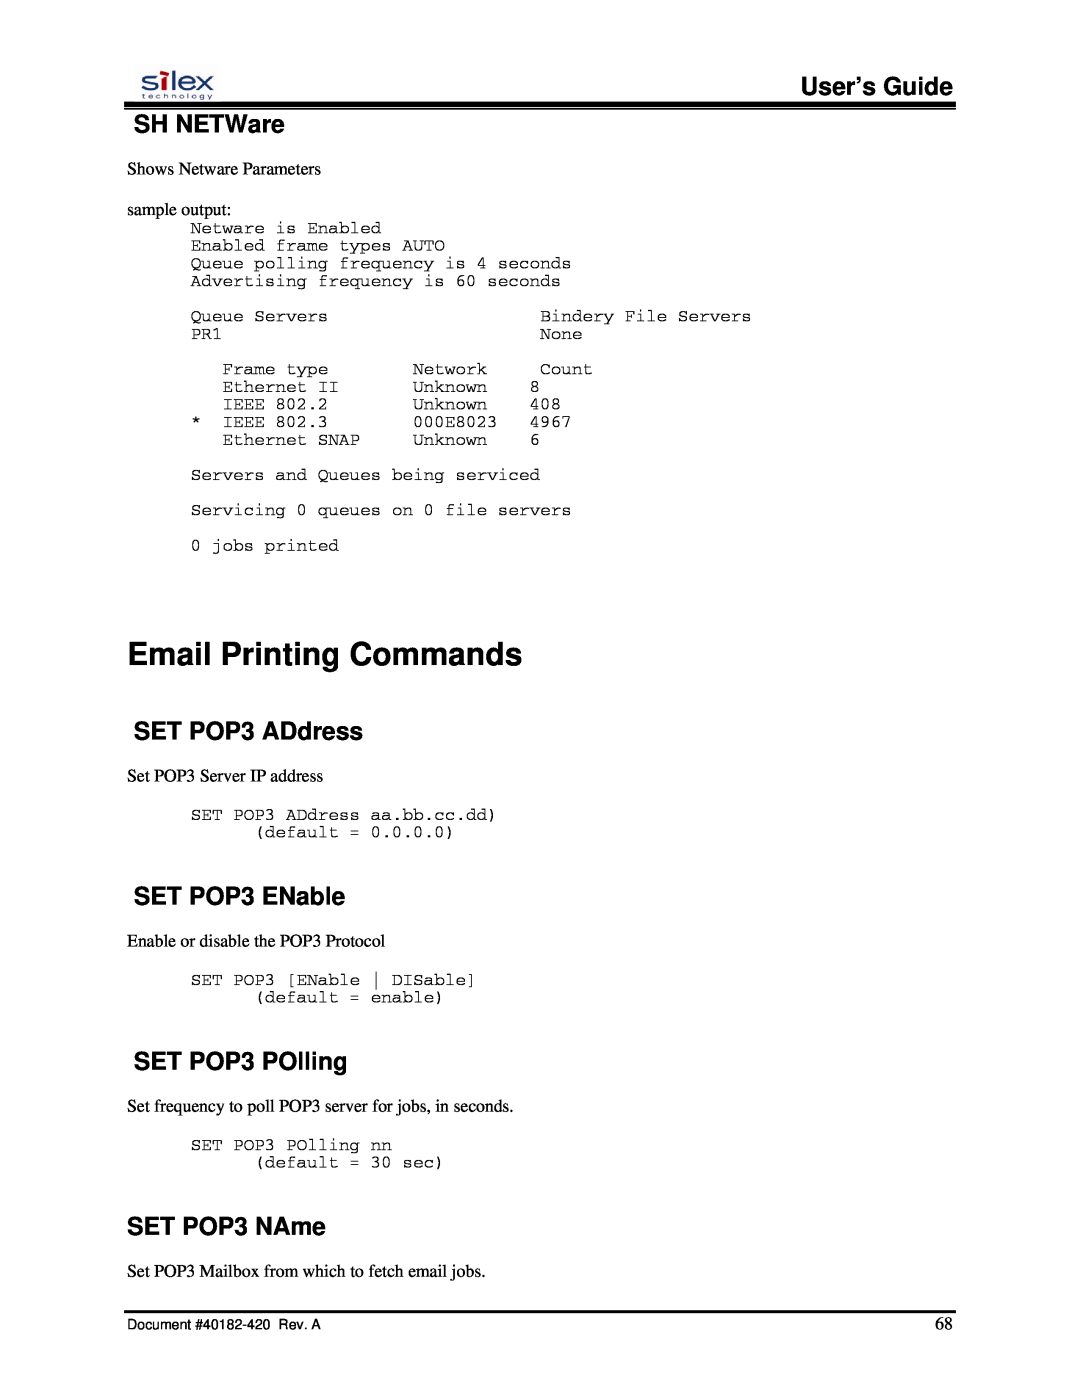 Silex technology SX-200 Email Printing Commands, User’s Guide SH NETWare, SET POP3 ADdress, SET POP3 ENable, SET POP3 NAme 